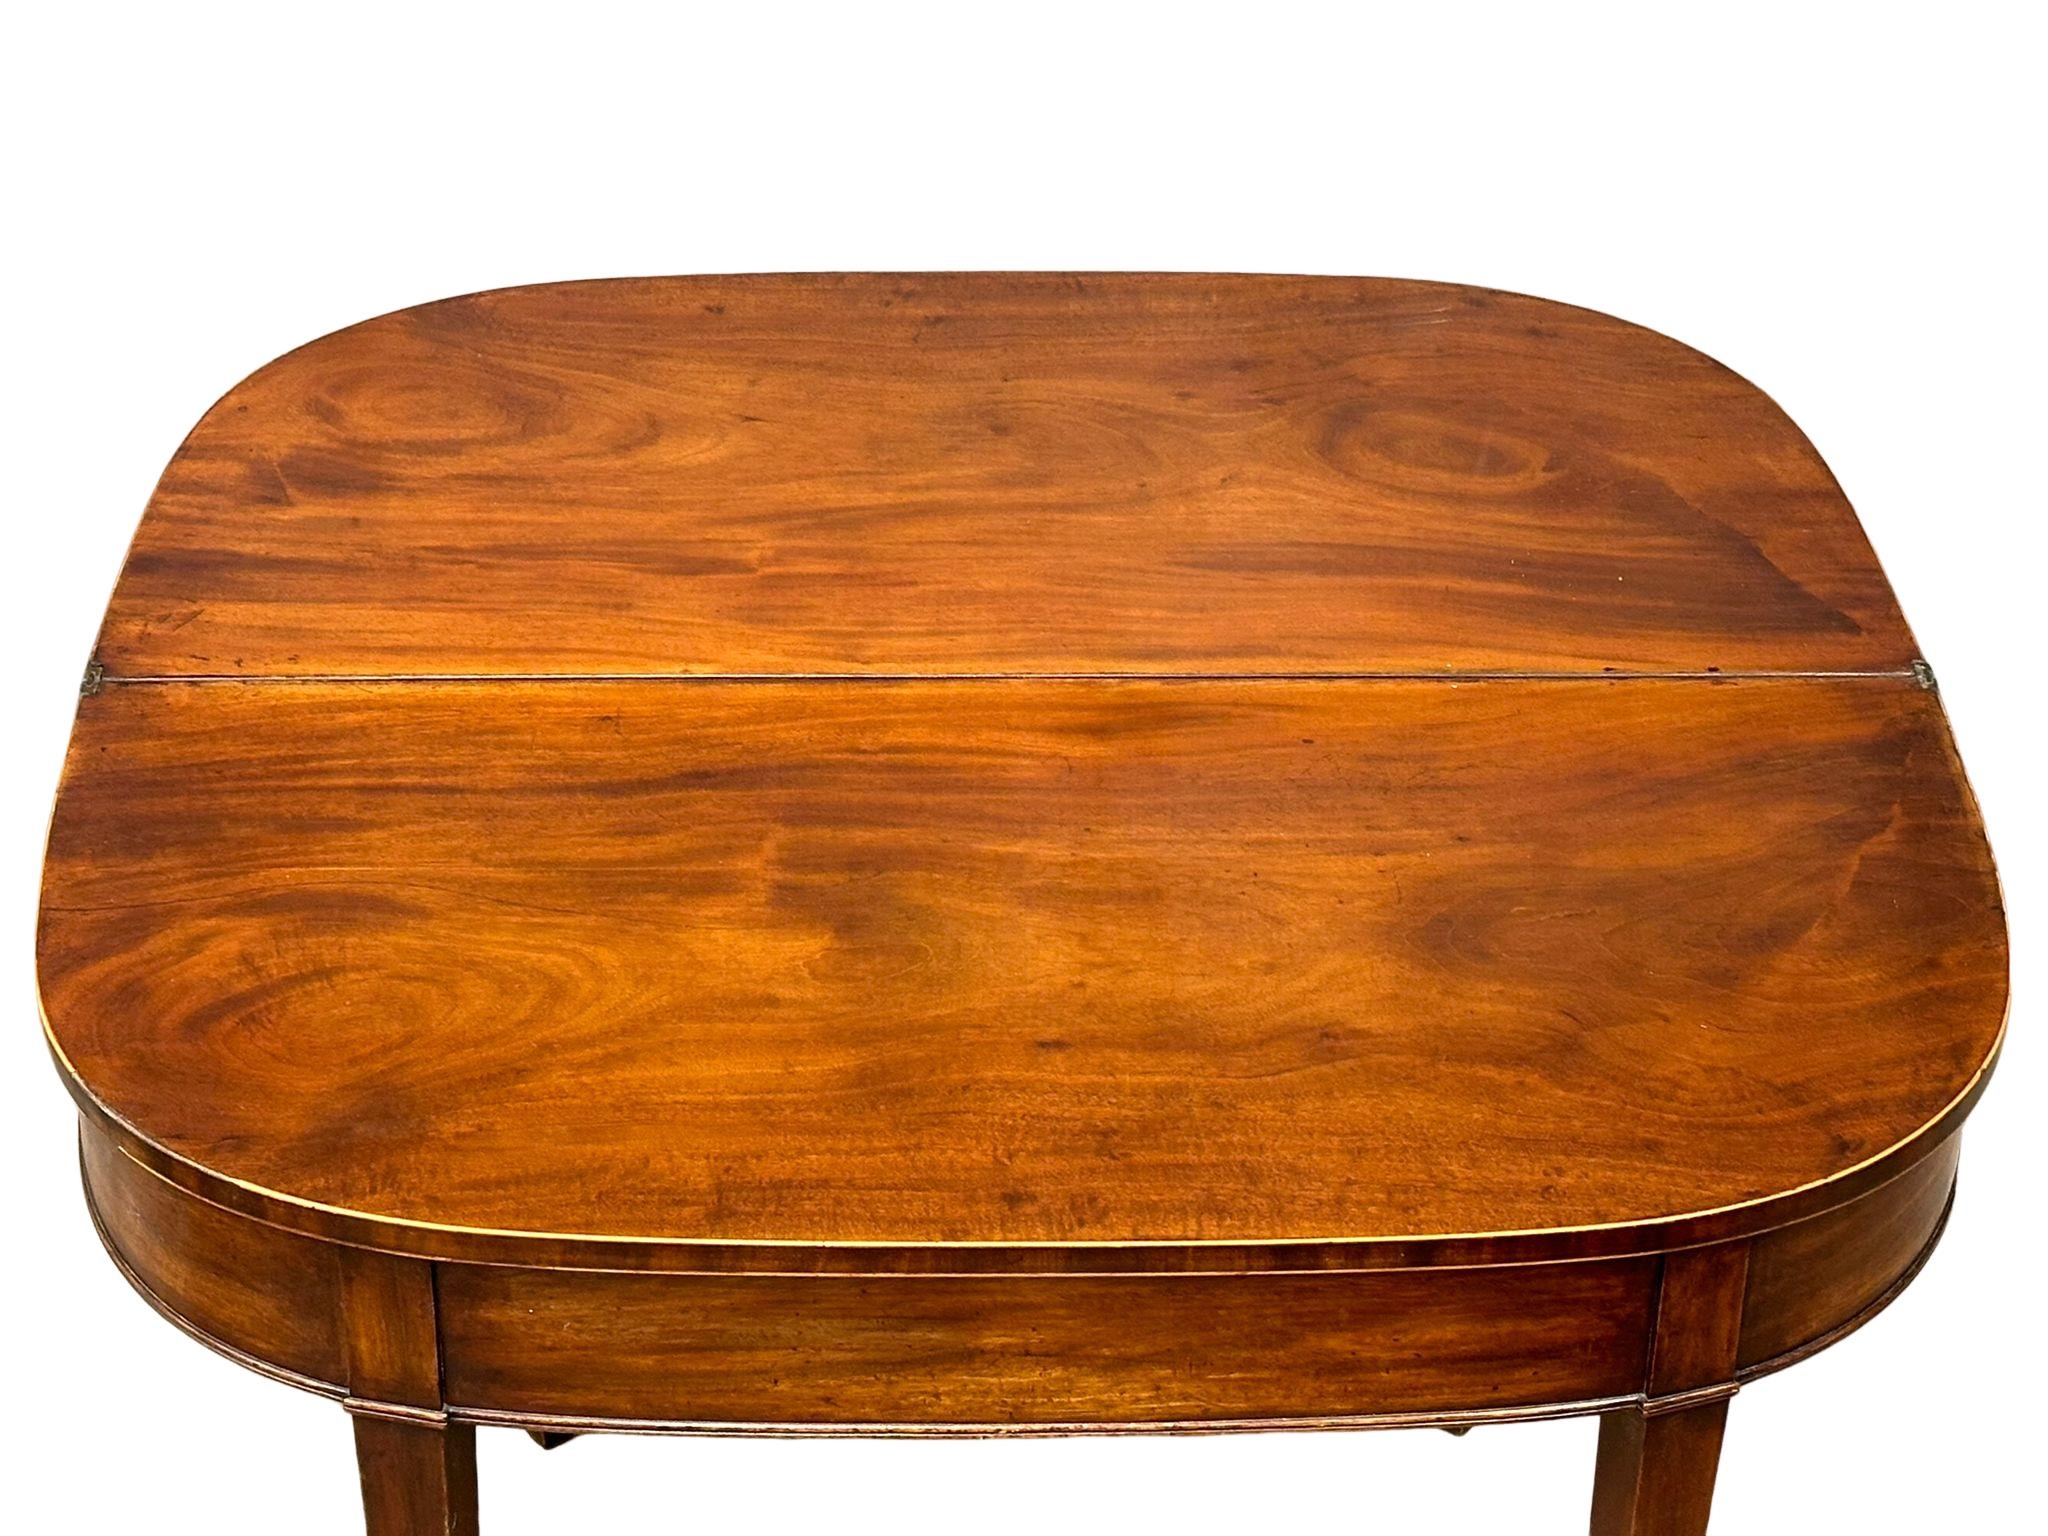 A George III inlaid mahogany turnover tea table. Circa 1800. 91x45.5x73cm - Image 3 of 6